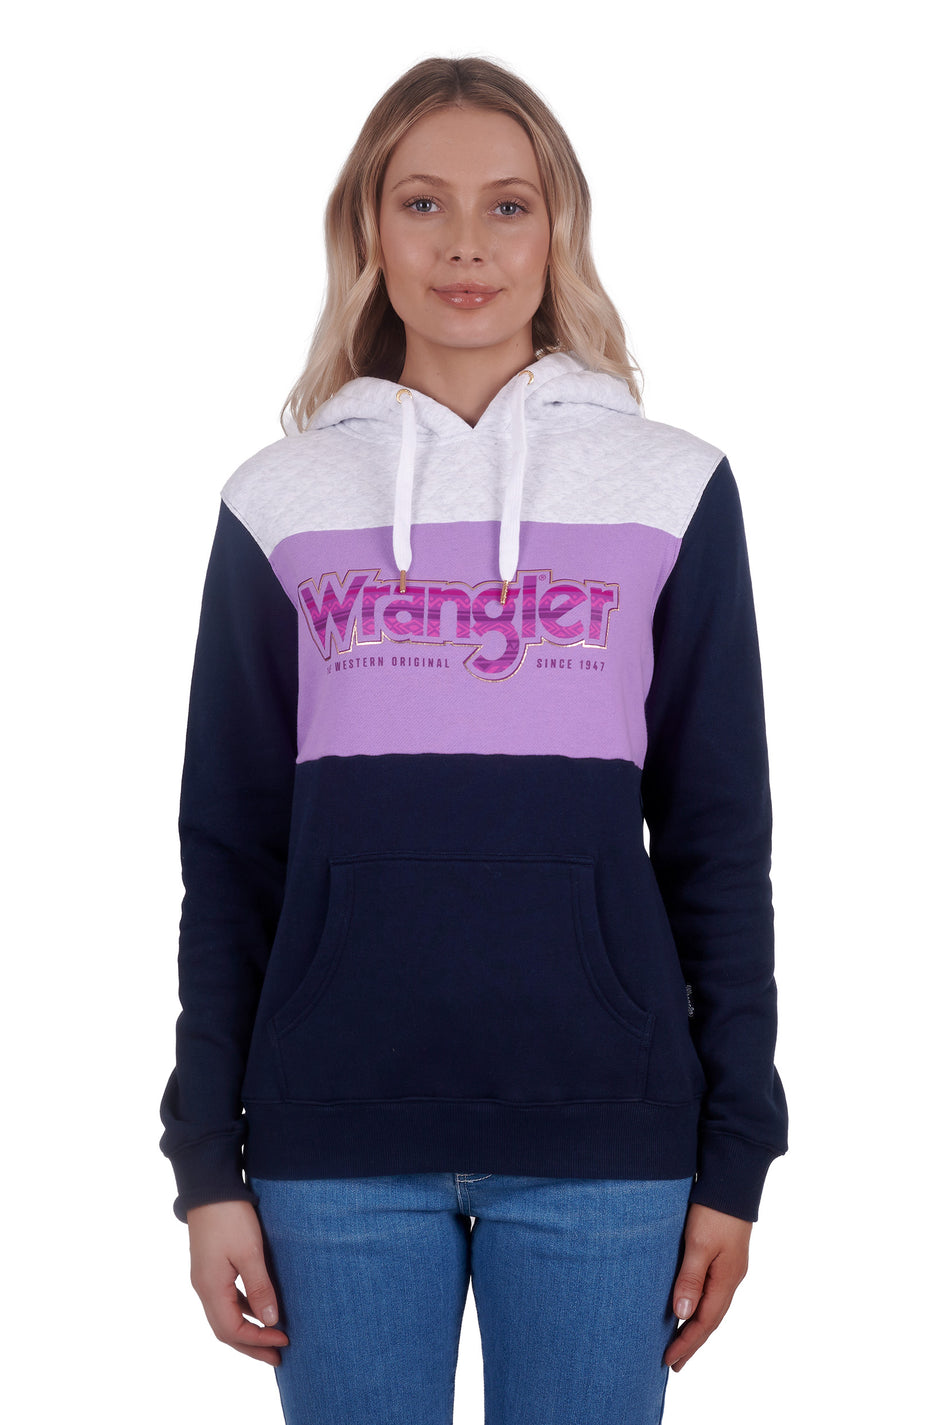 Wrangler - Womens Salley Pullover Hoodie